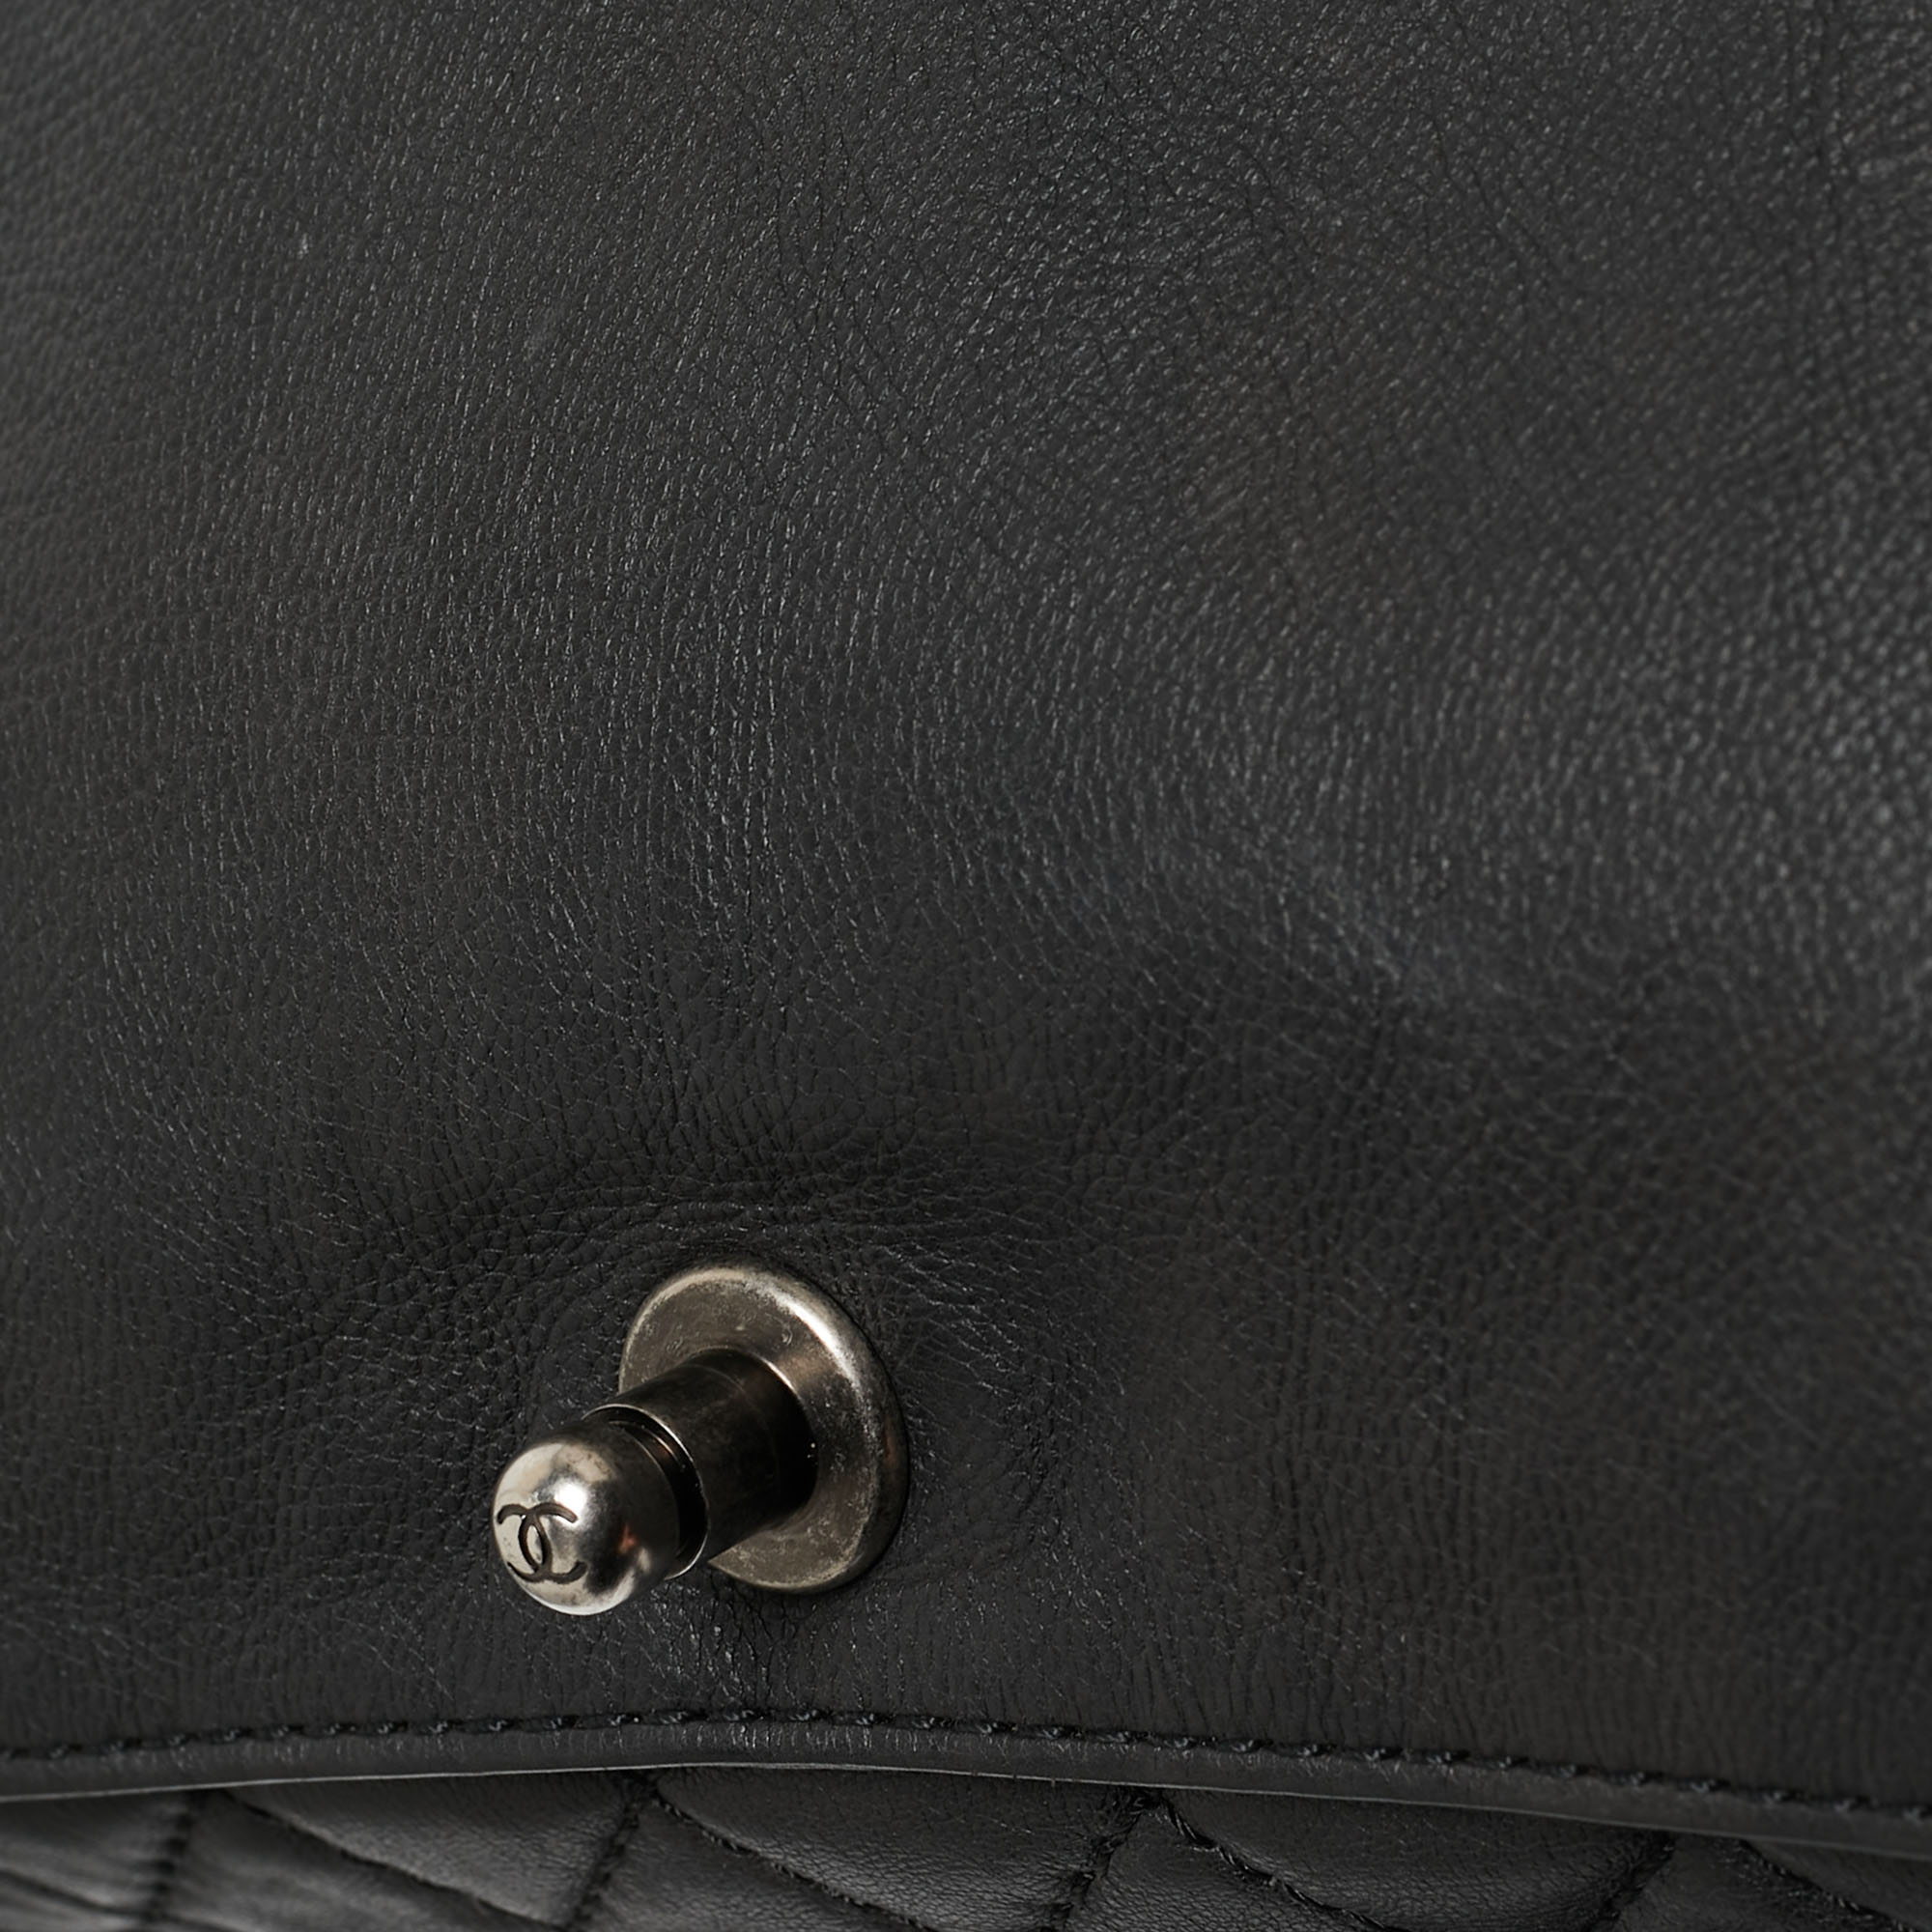 Chanel Black Leather Medium Boy Reverso Bag